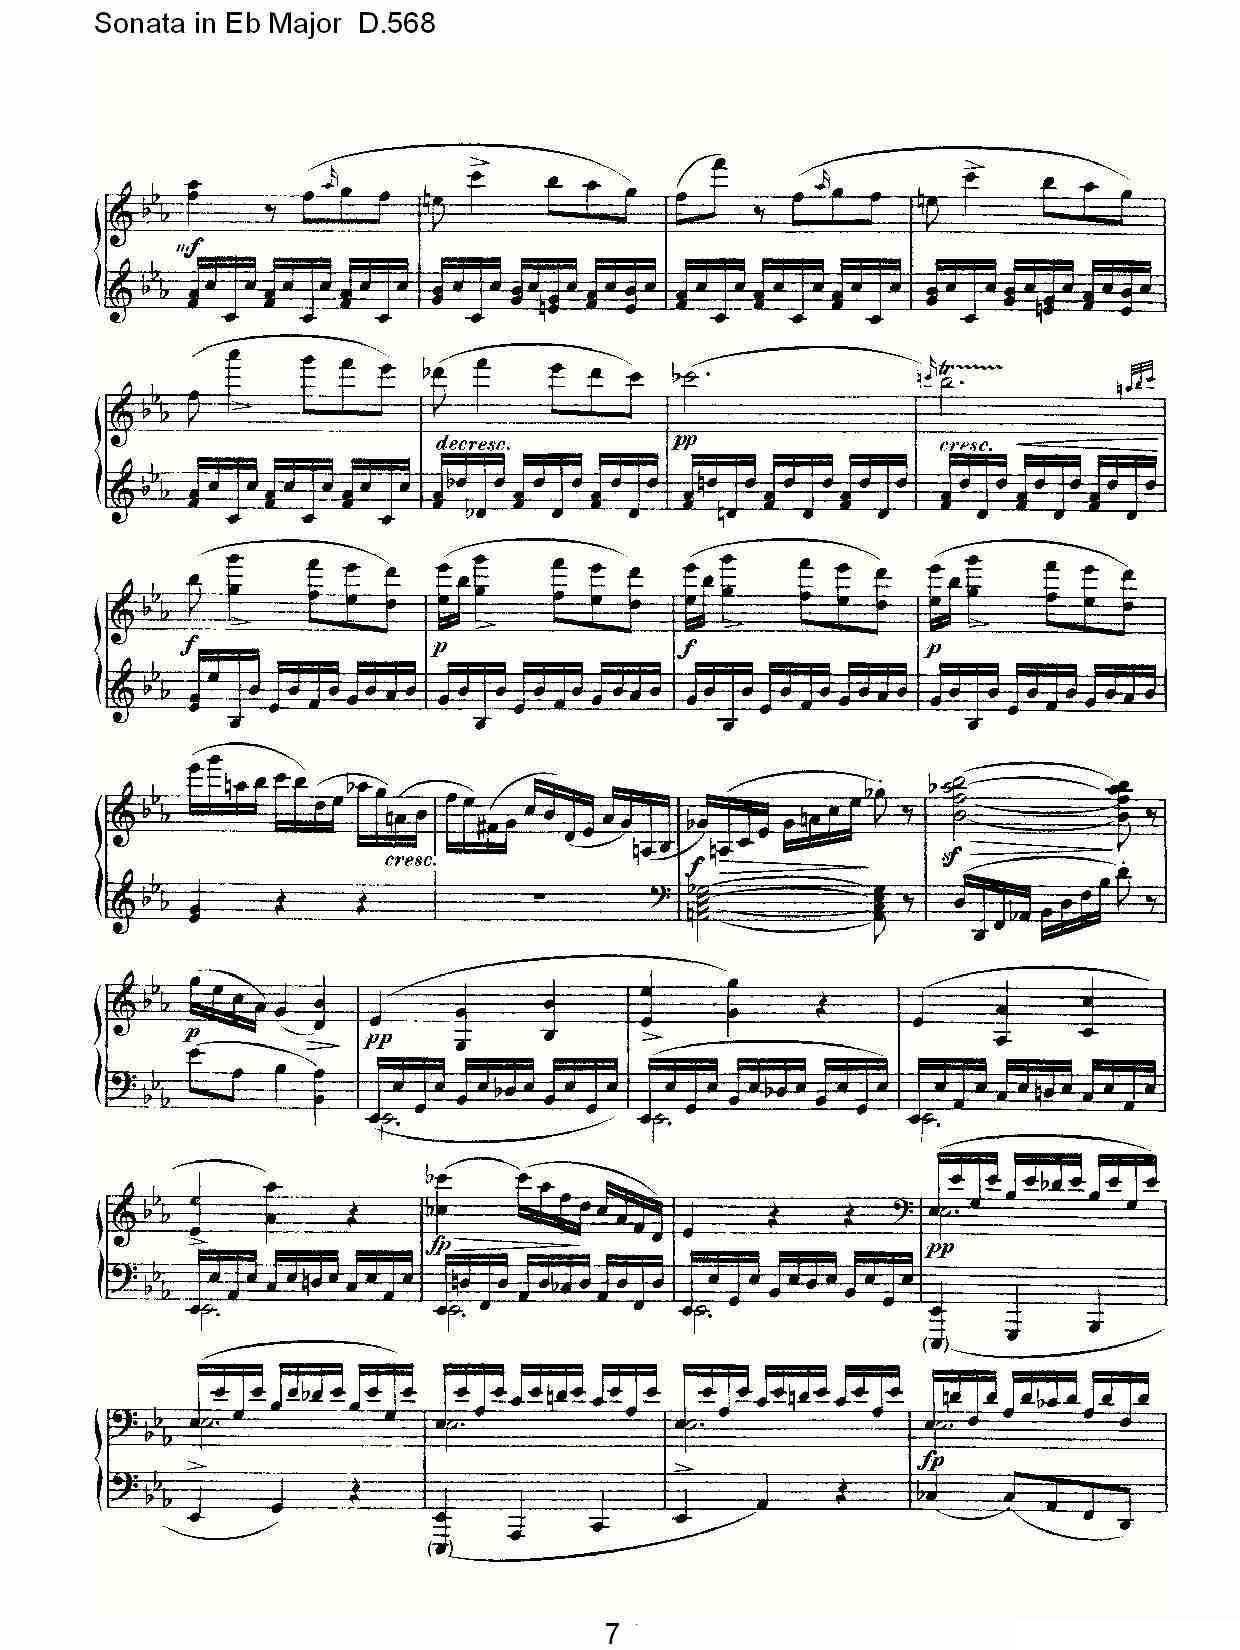 Sonata in Eb Major D.568（Eb大调奏鸣曲 D.568）钢琴曲谱（图7）